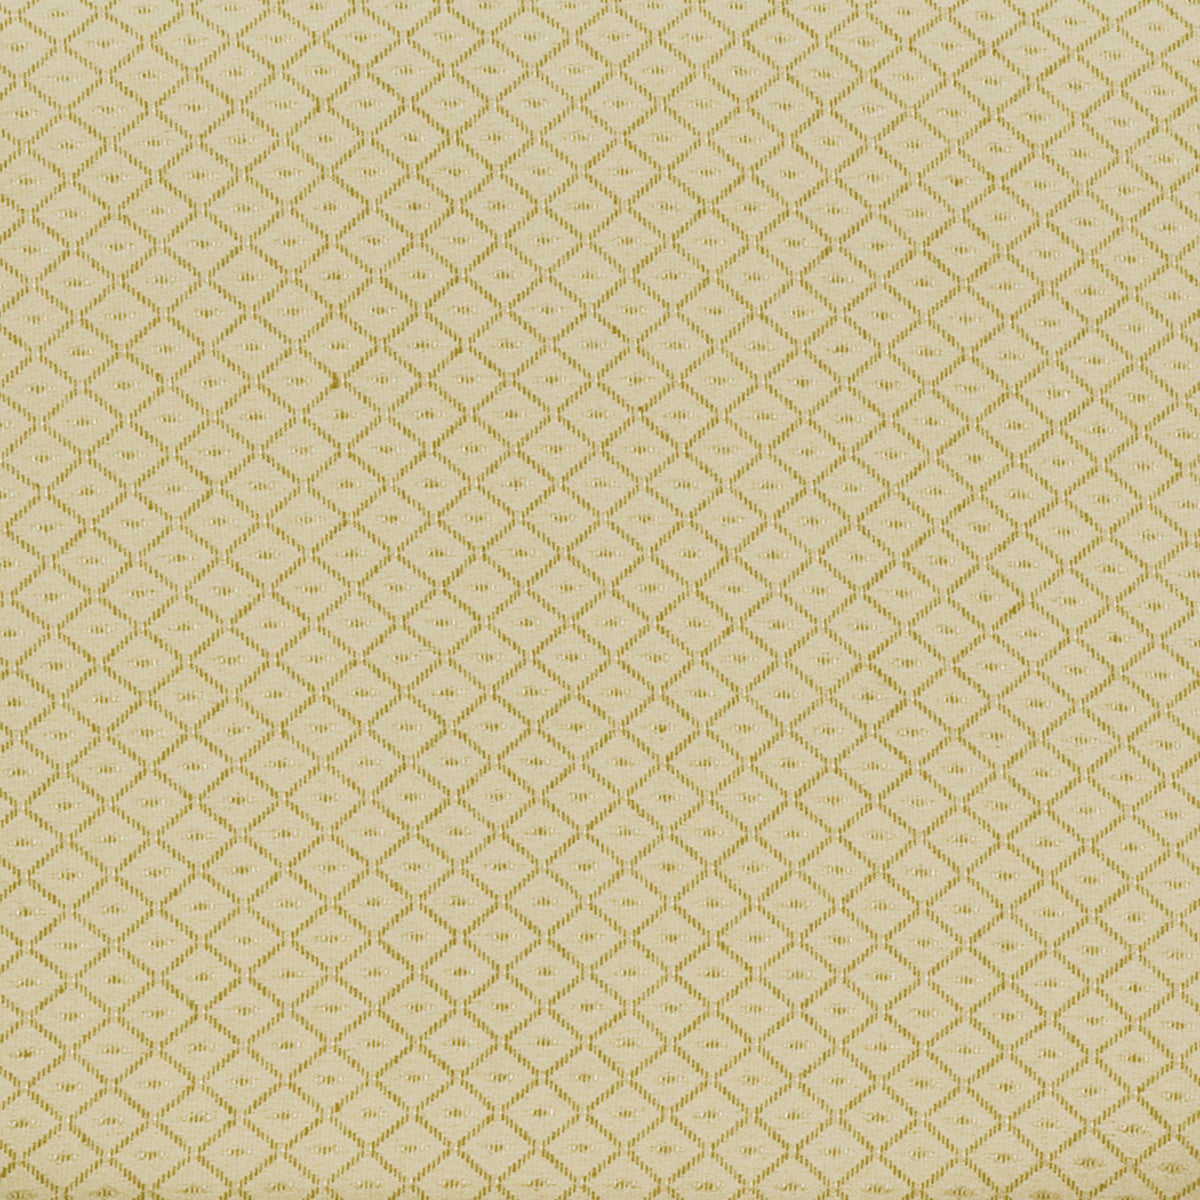 Beige Patterned Fabric/Gold Vein Frame |#| 18.5inchW Church Chair in Beige Patterned Fabric with Book Rack - Gold Vein Frame